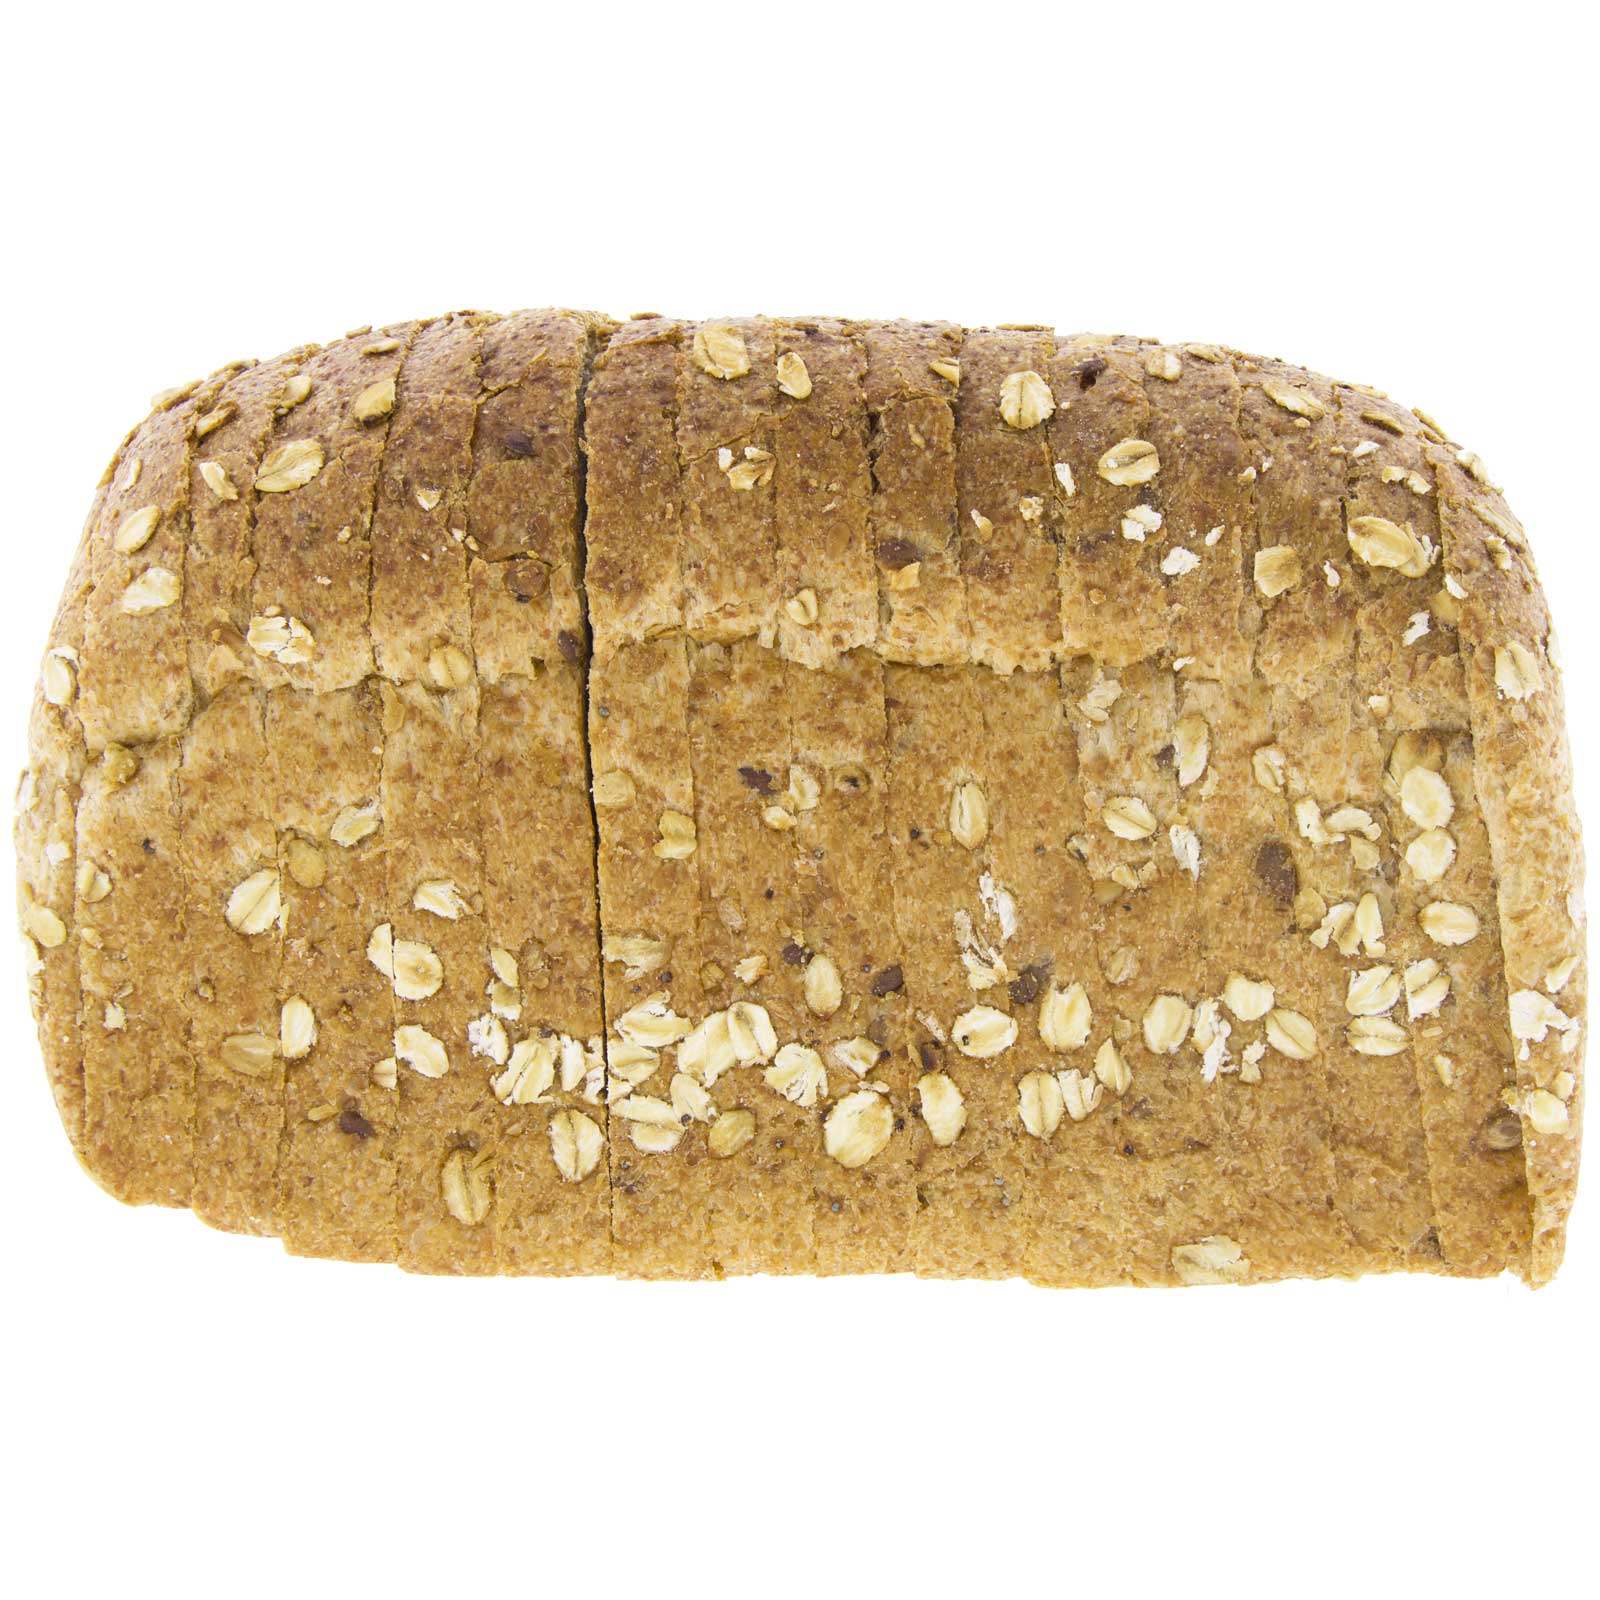 Integral Spelt Molde Bread With 450g Artisan Organic Cereals